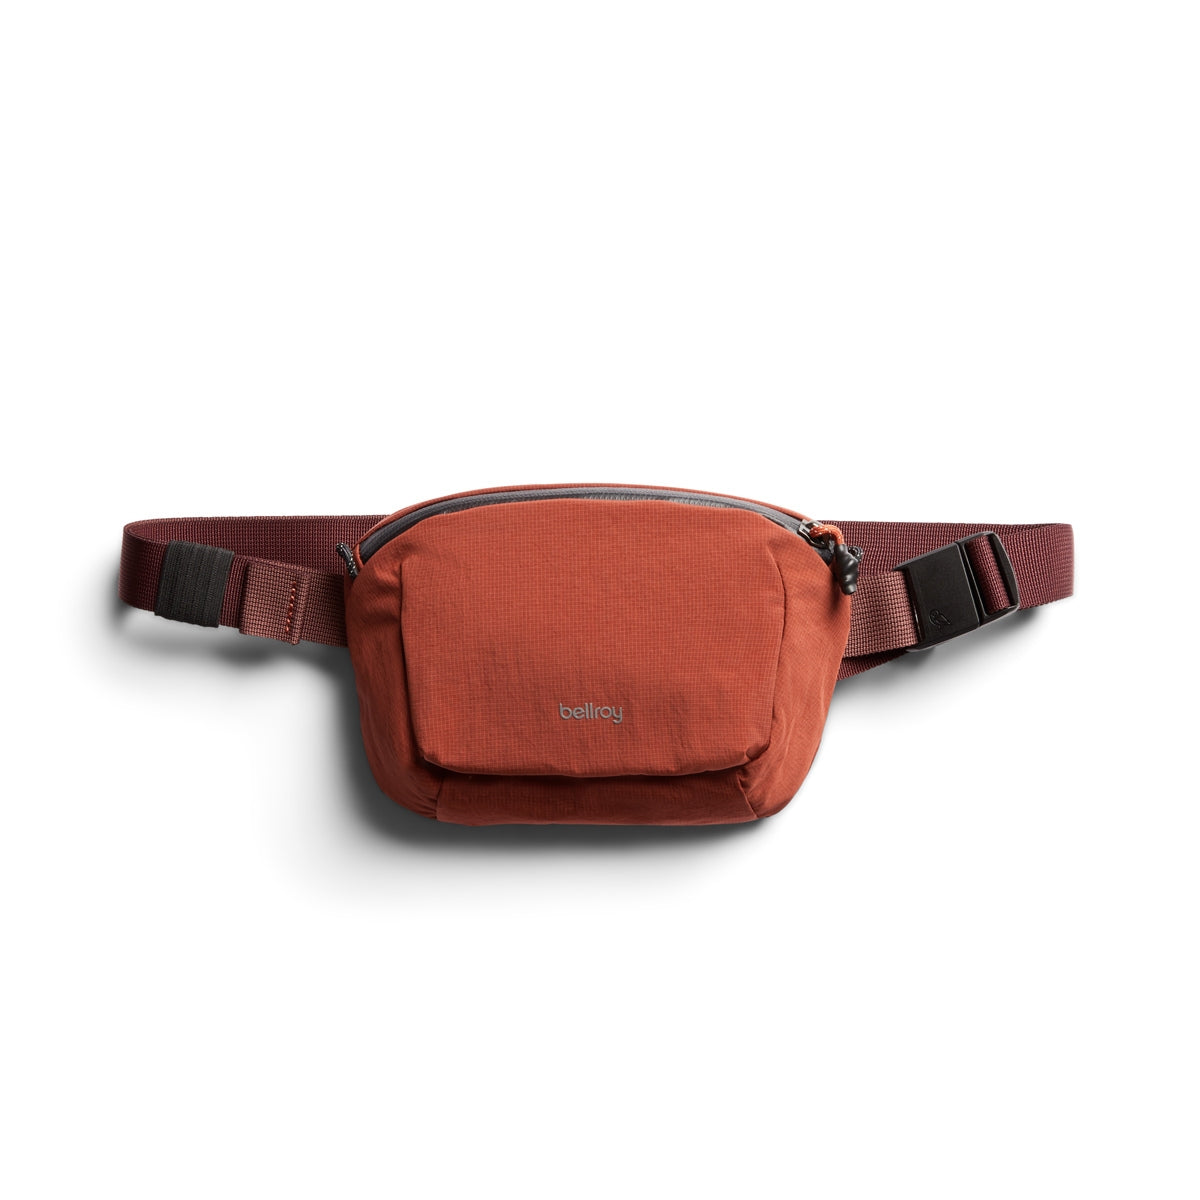 Bellroy Lite Belt Bag in Clay